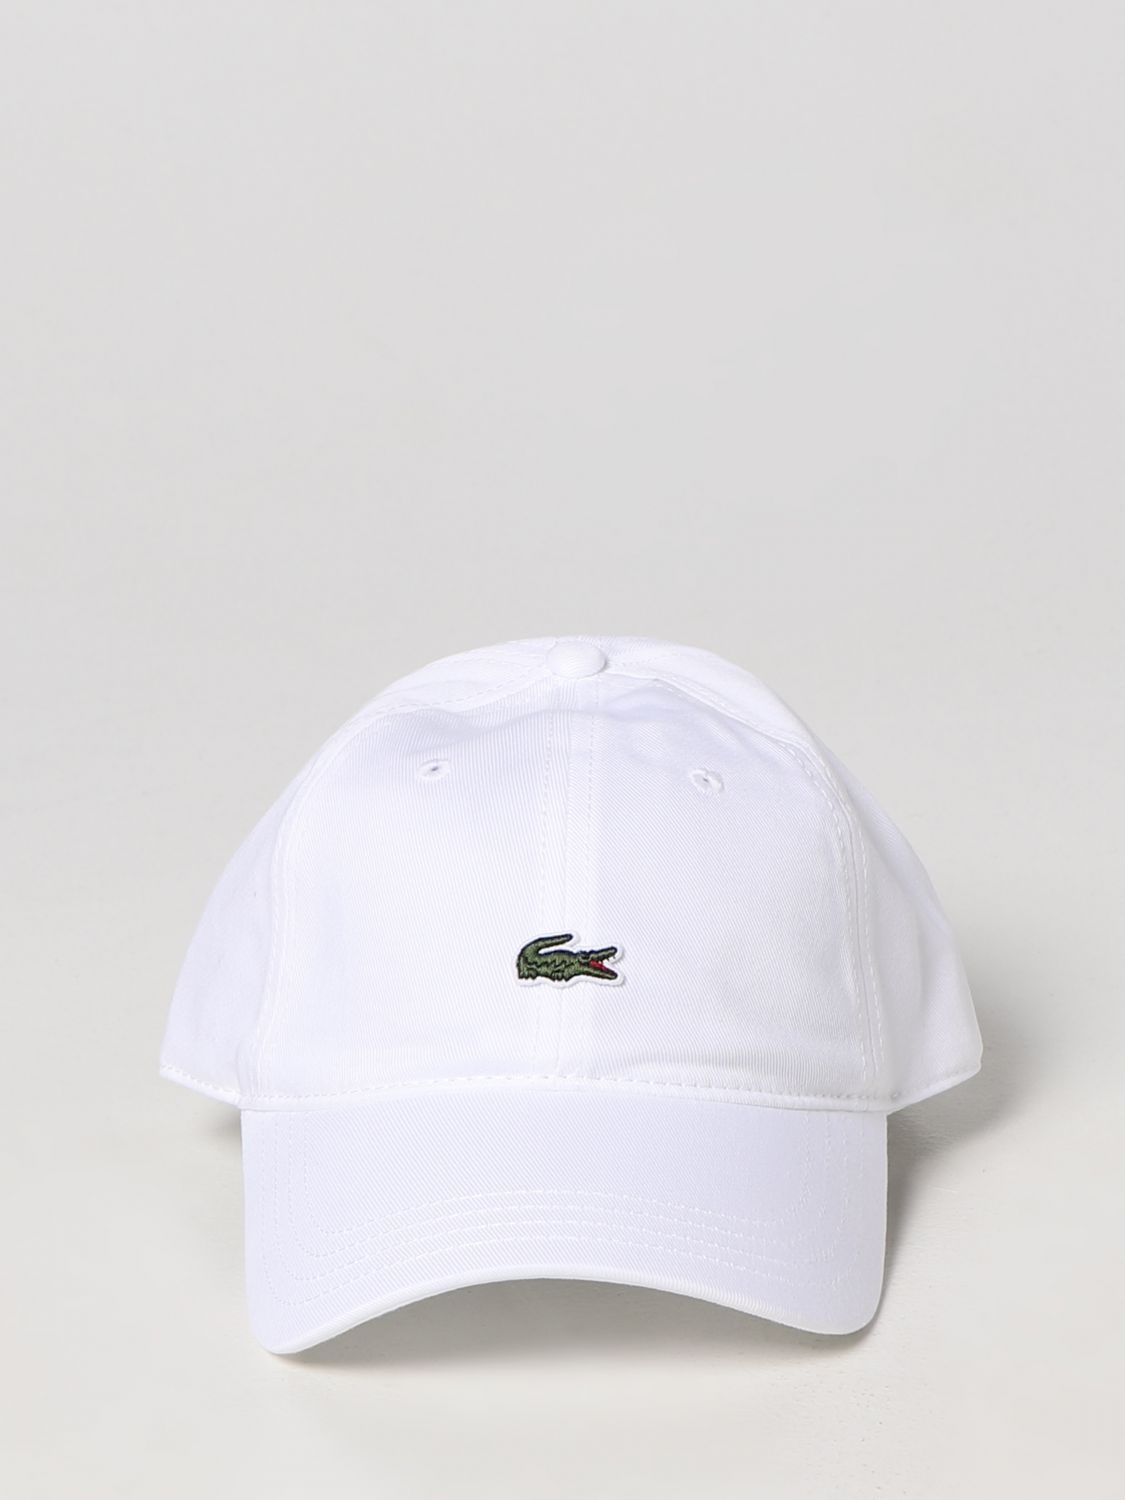 Inspireren aankleden De vreemdeling LACOSTE: hat for man - White | Lacoste hat RK0491 online on GIGLIO.COM